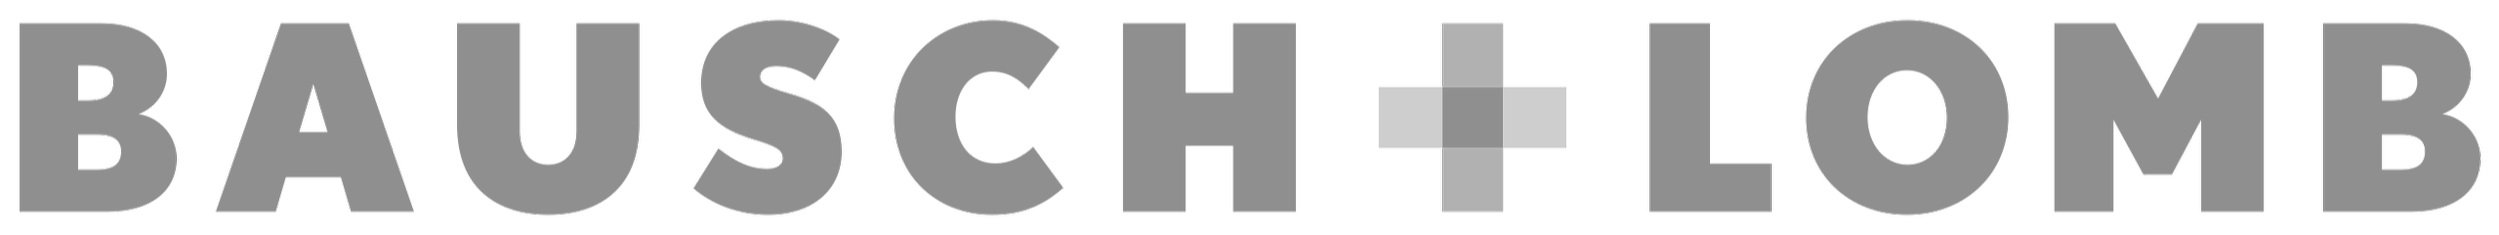 Bausch_and_Lomb_Logo_2010.jpg